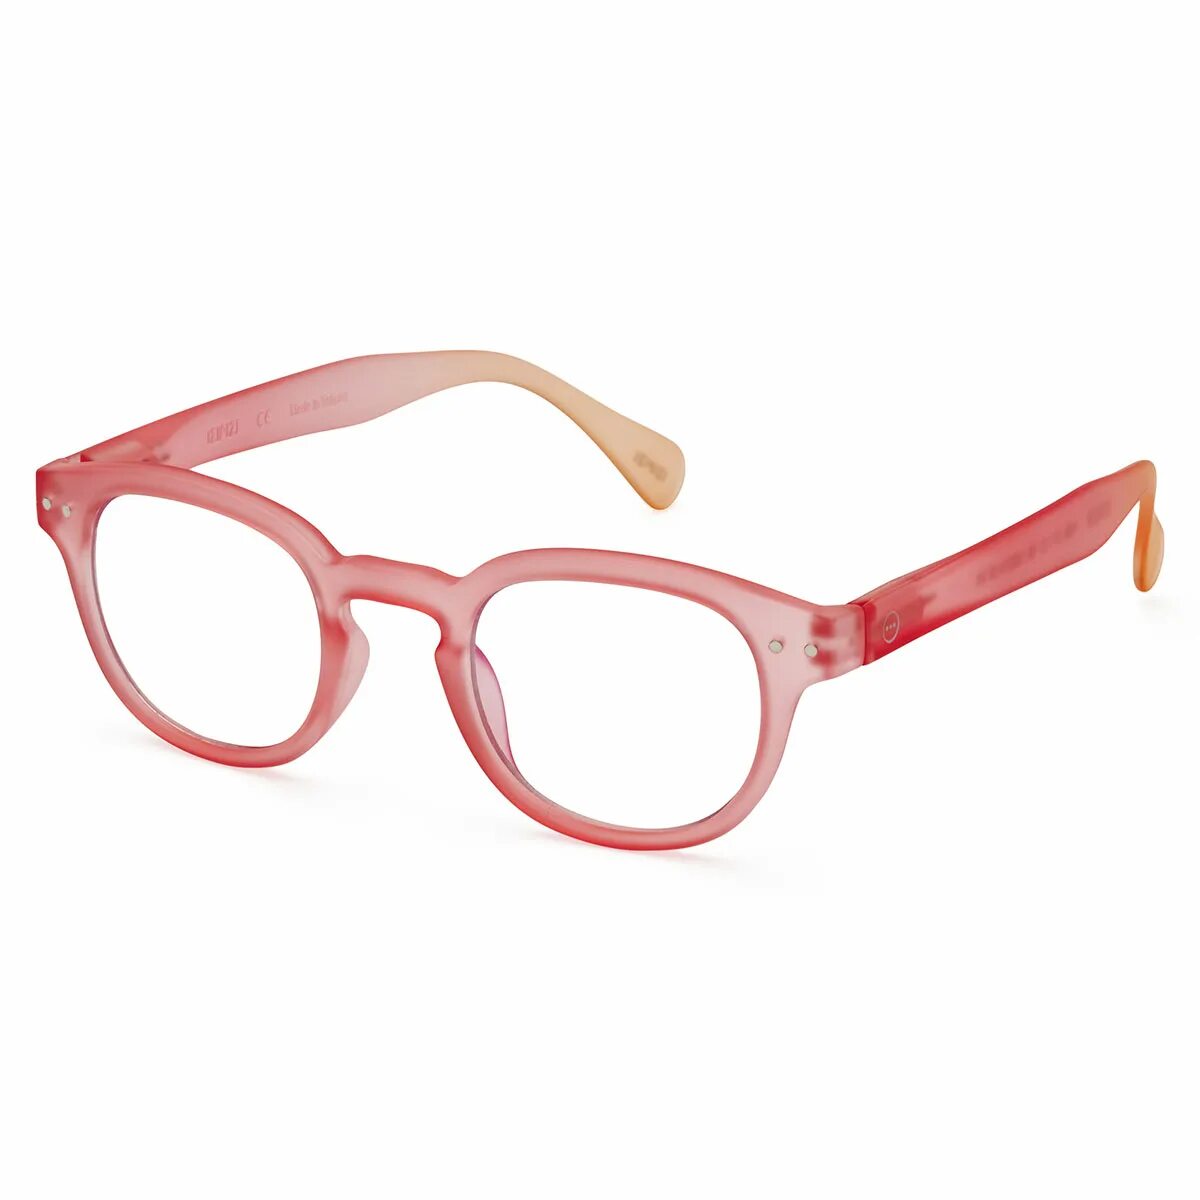 Купить очки izipizi. IZIPIZI очки. Olmacome 5007-19c оправа. Очки IZIPIZI складные. IZIPIZI Oasis детские.